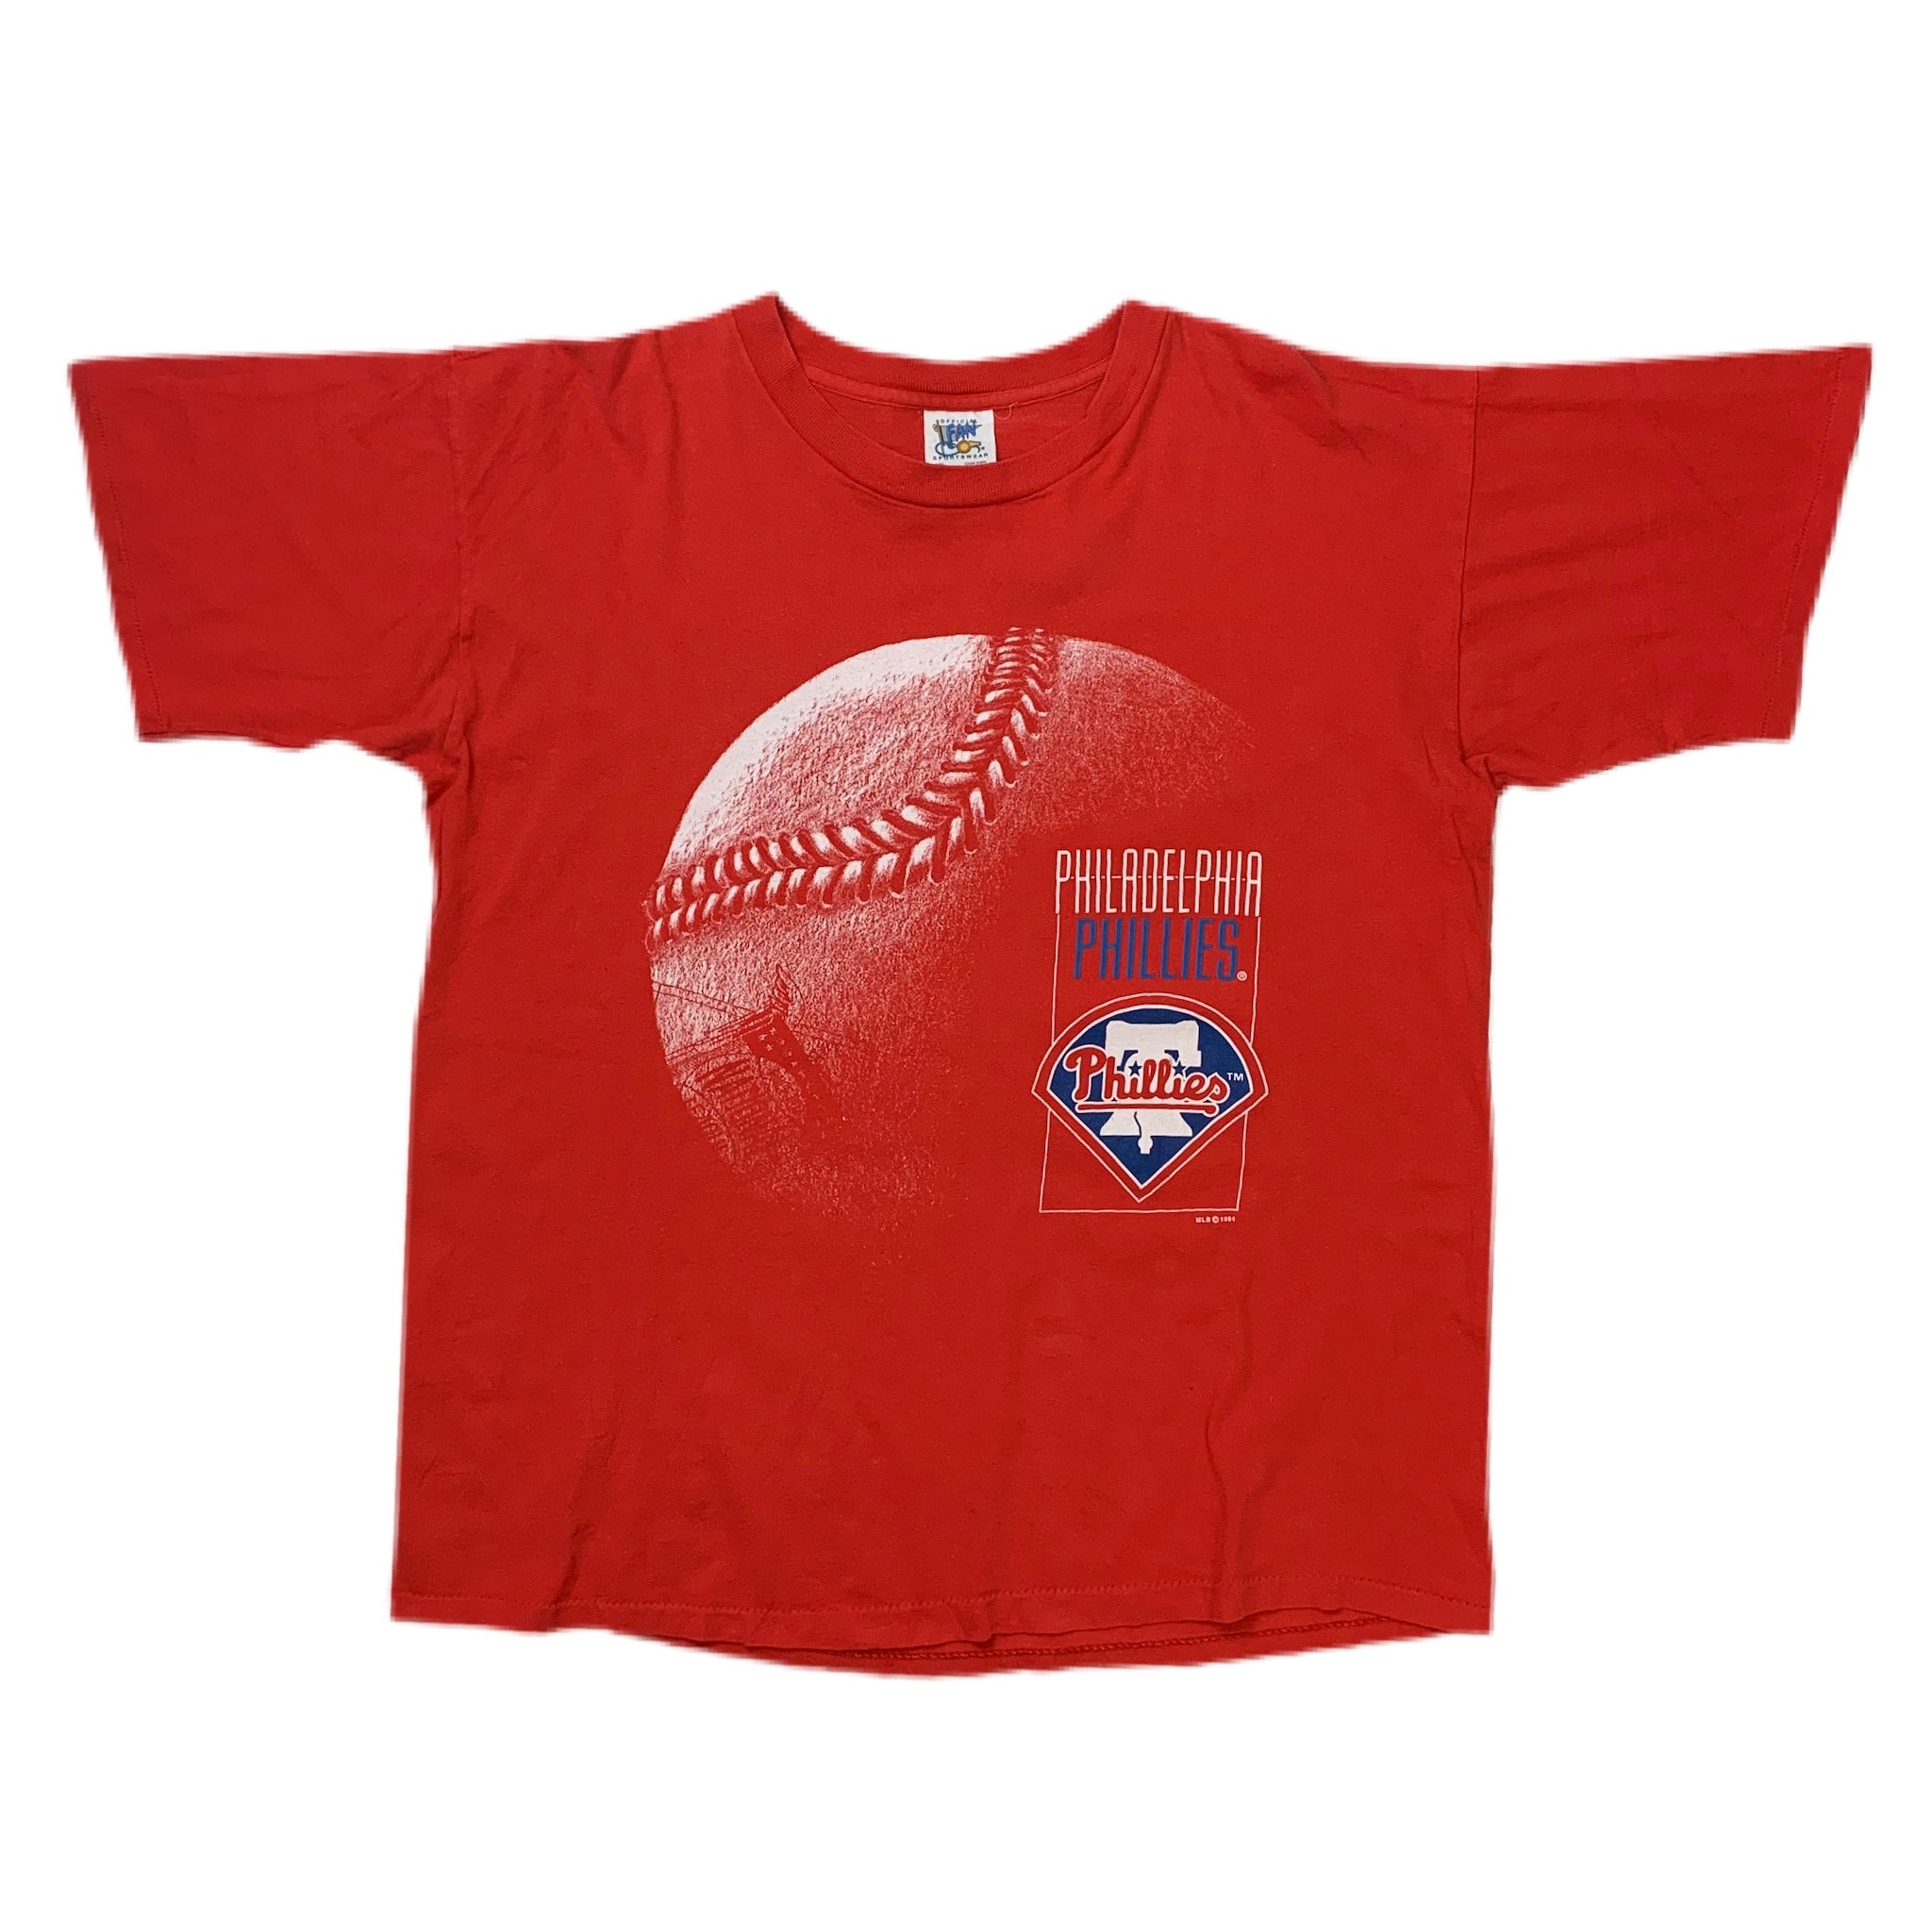 1994 Philadelphia Phillies Red Vintage Shirt